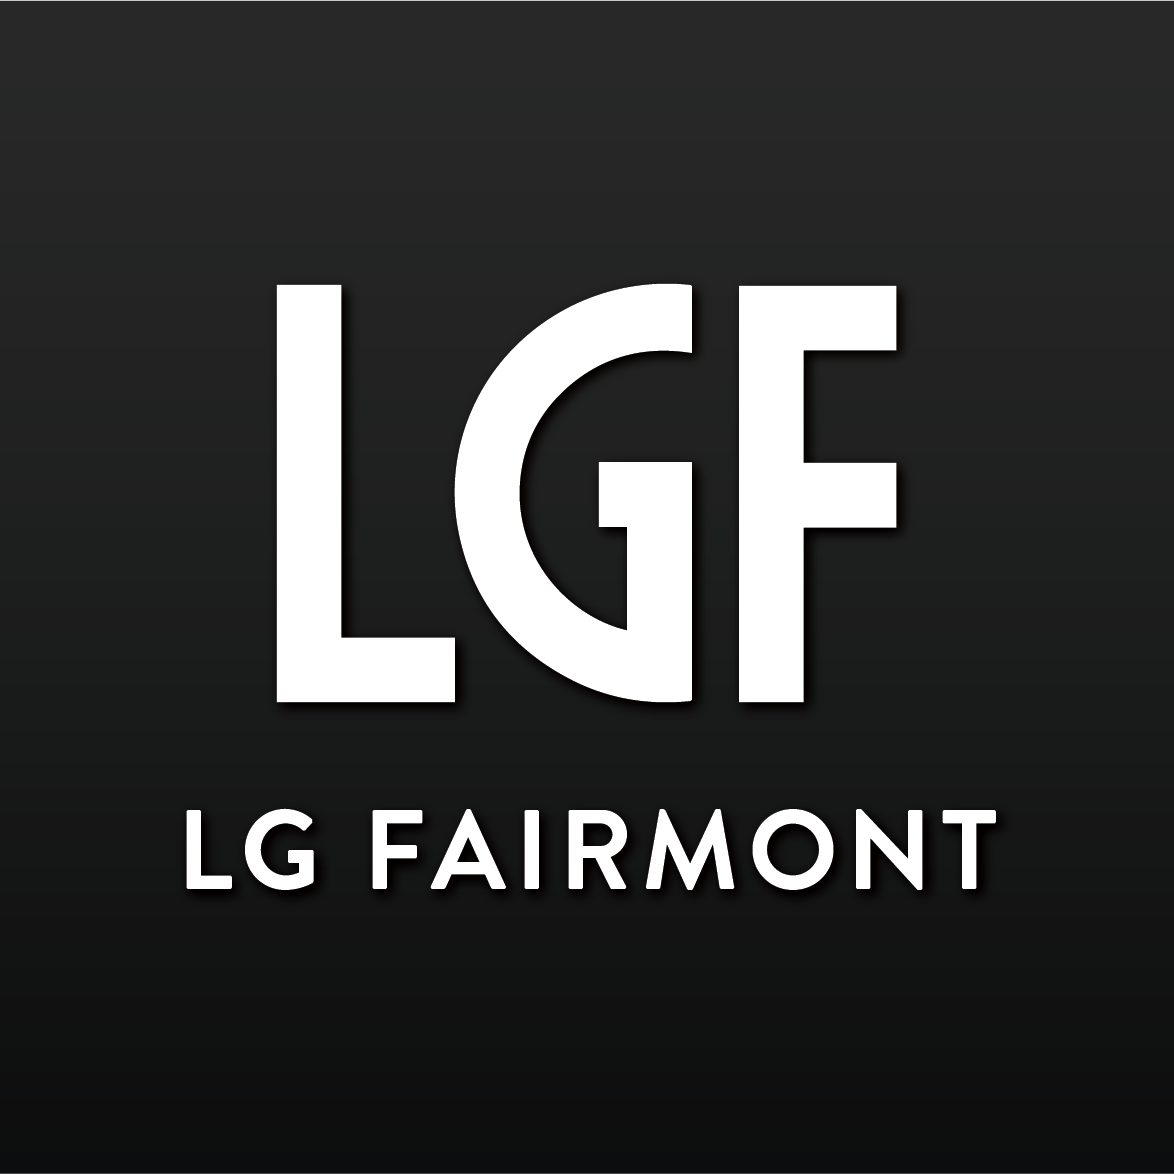 LG Fairmont